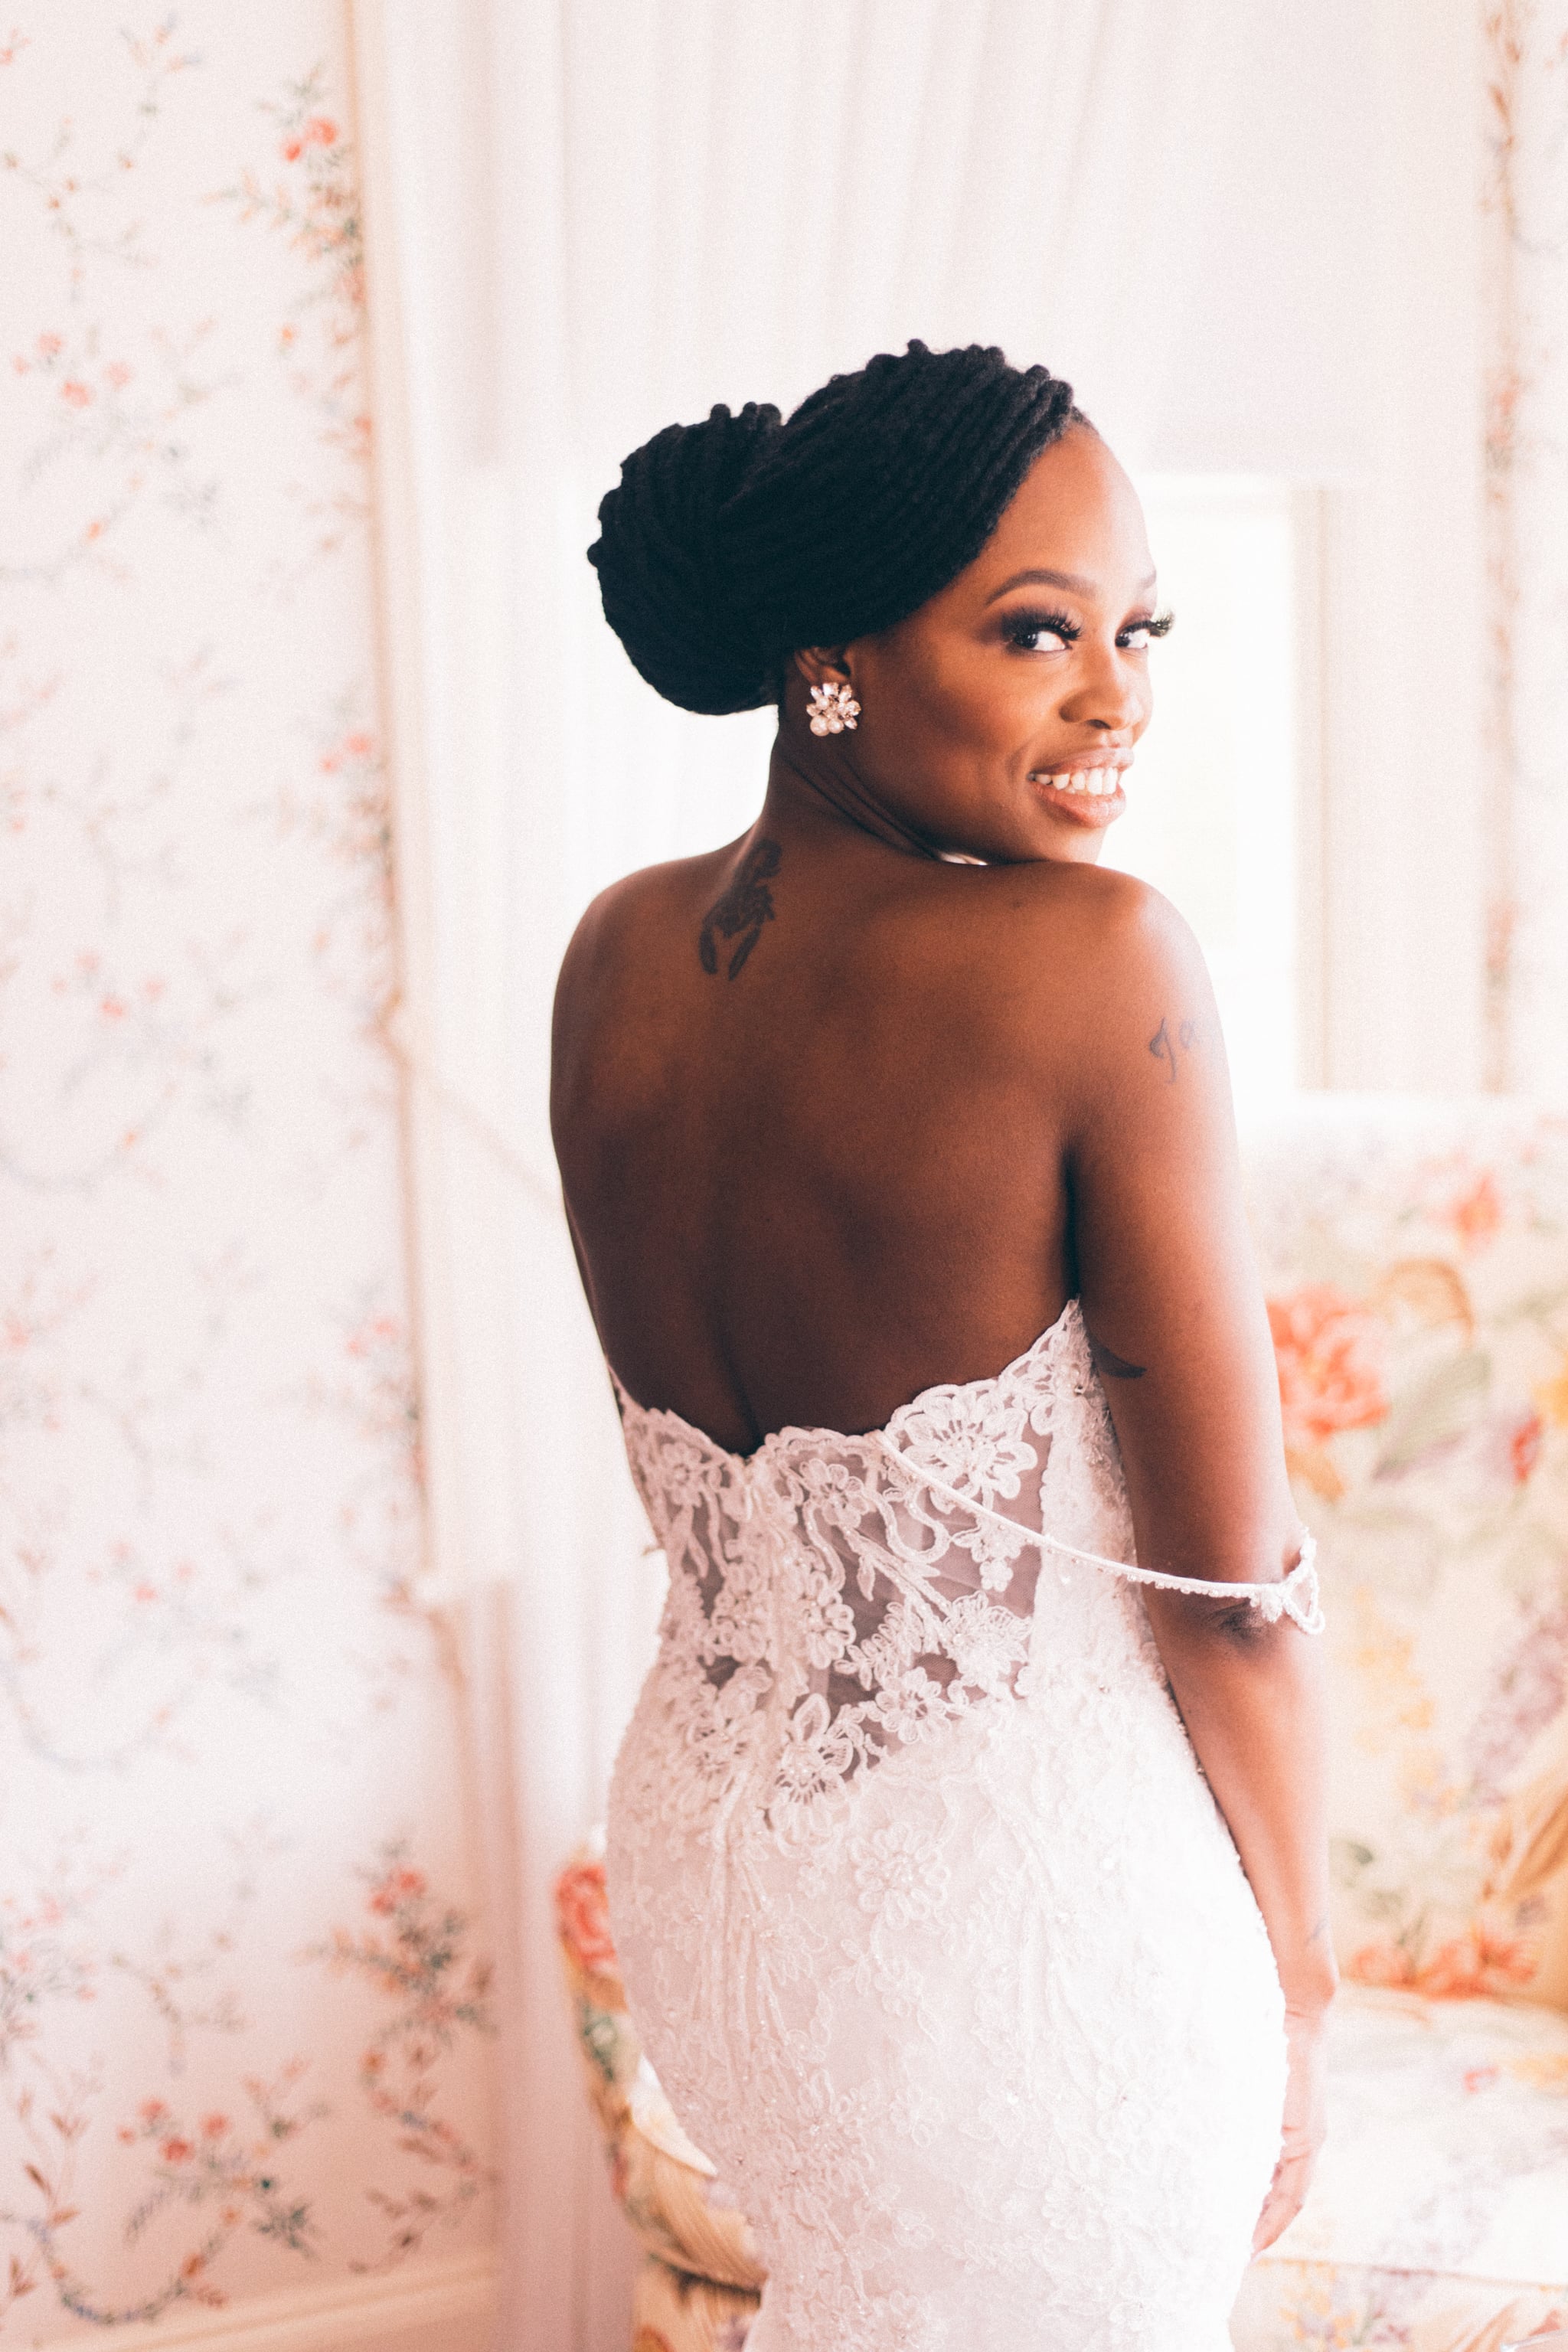 Bridal Hairstyle Inspiration For Black Women | POPSUGAR Beauty